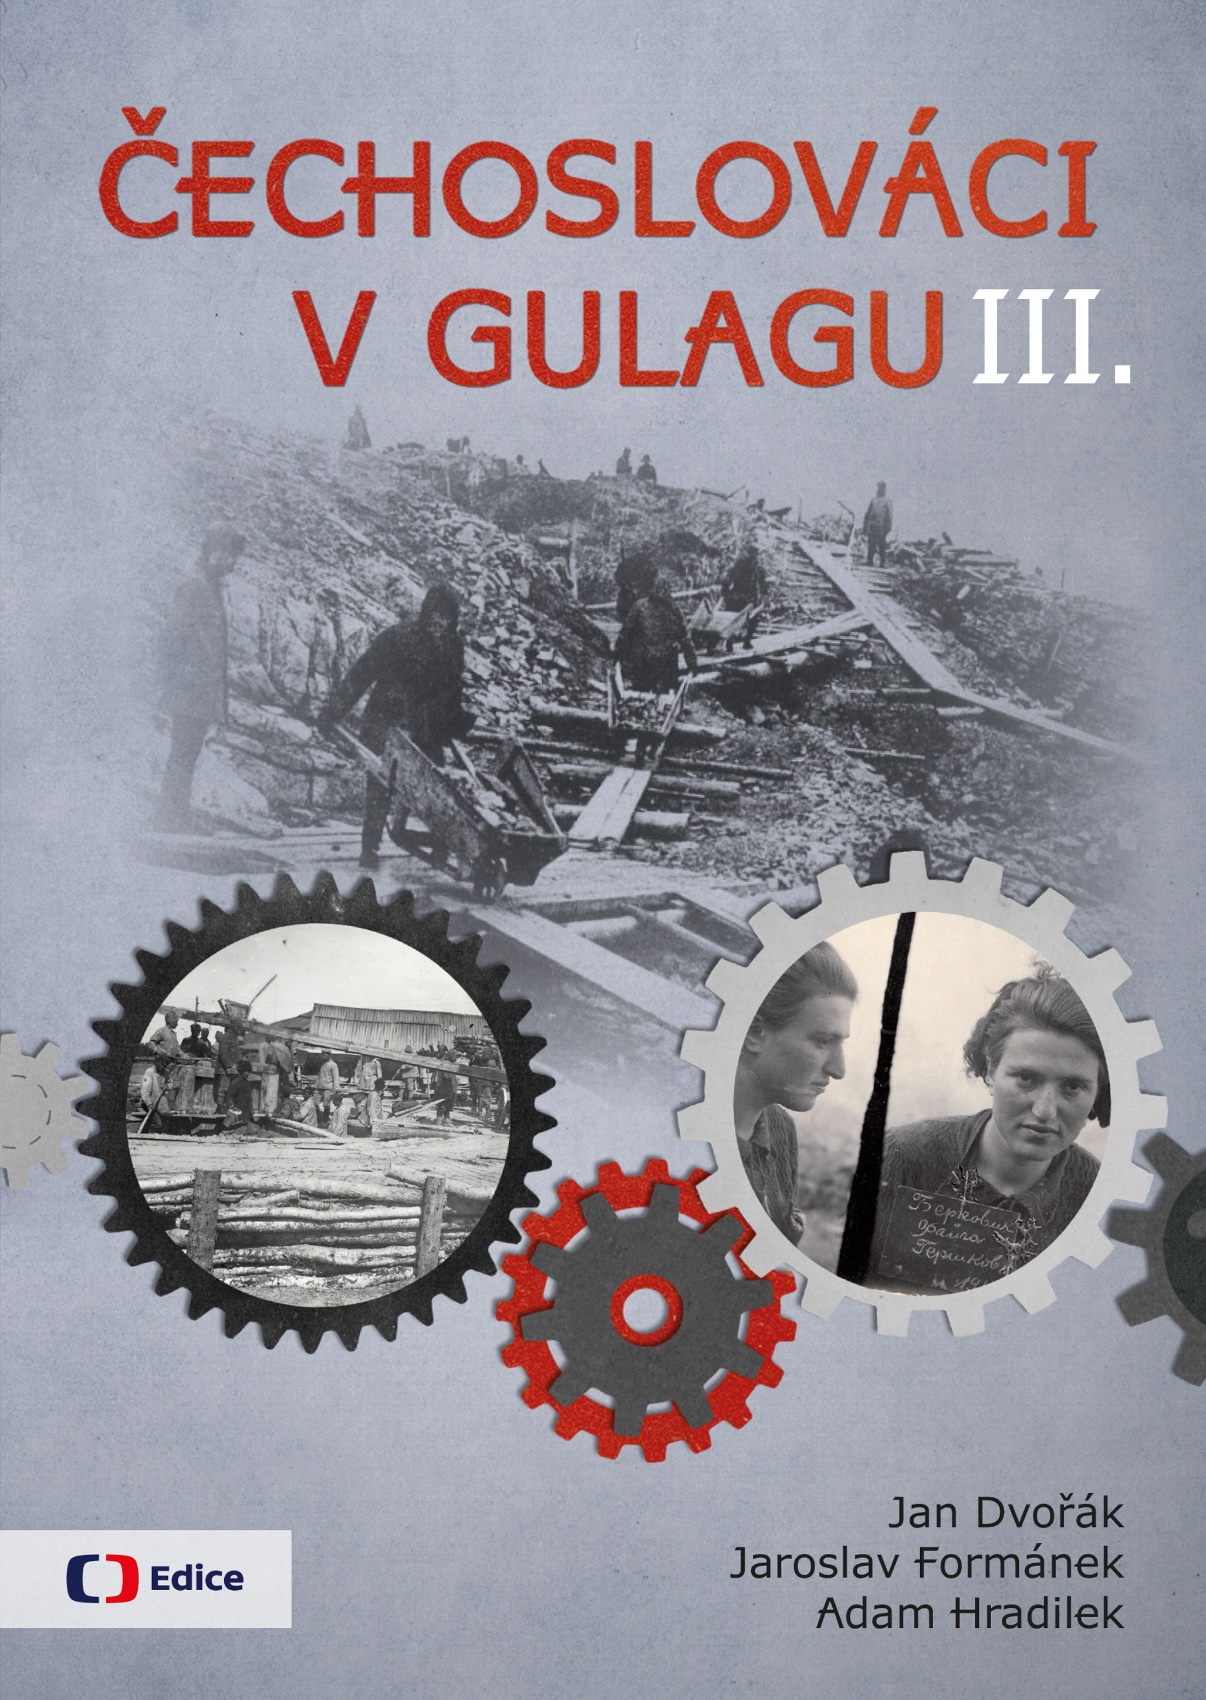 Czechoslovaks in the Gulag III: Book Presentation